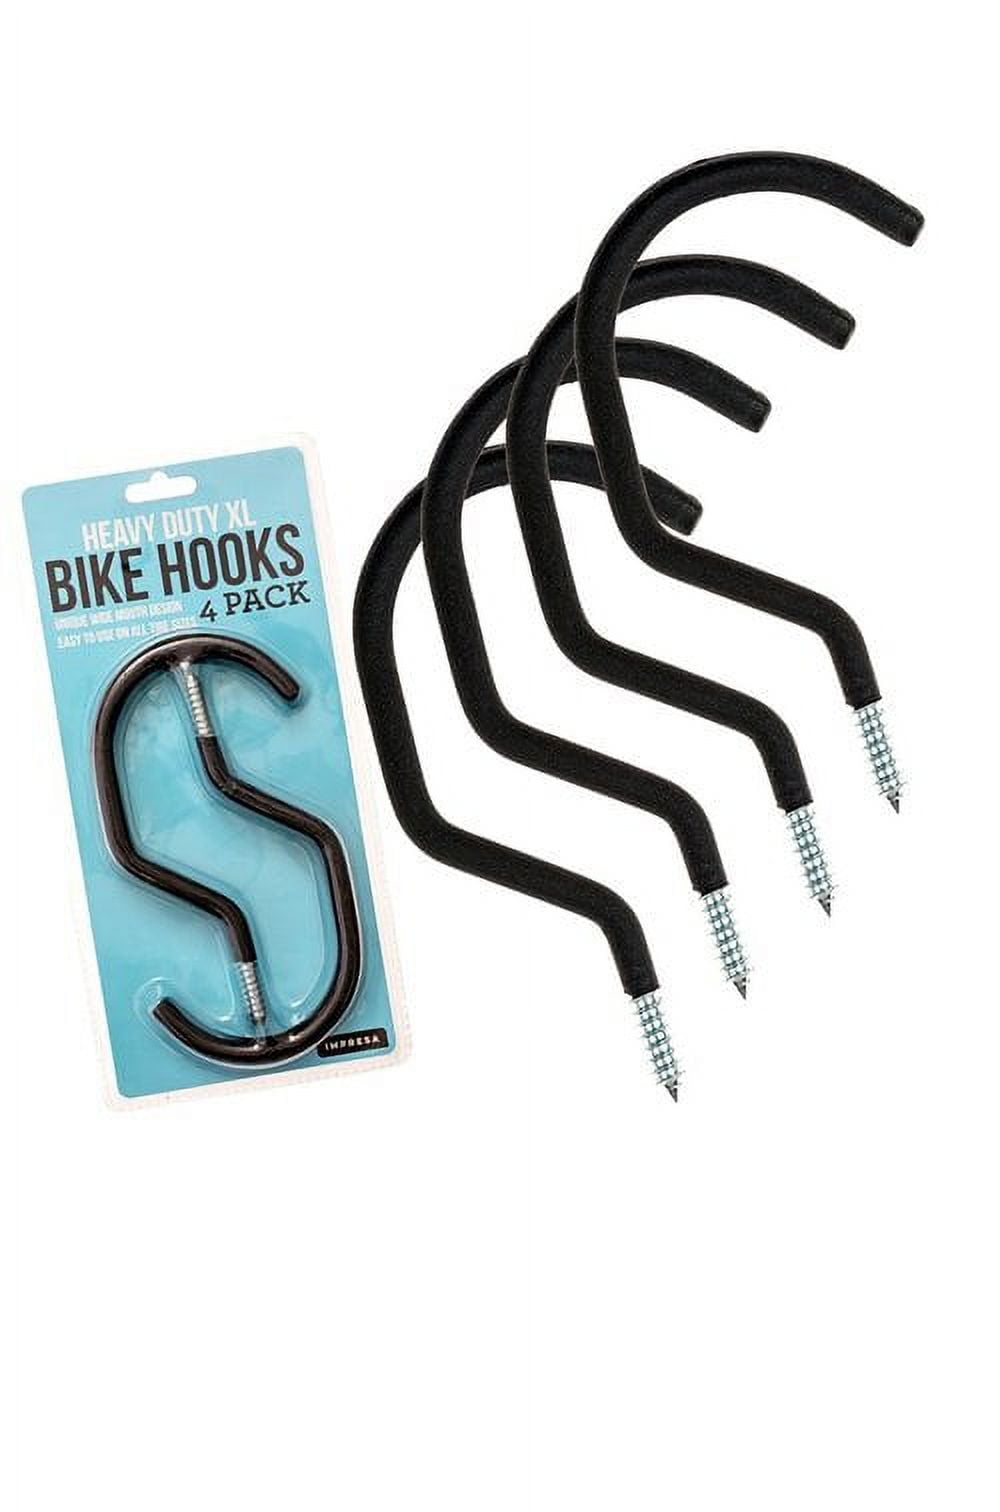 IMPRESA [4 Pack] Heavy Duty Bike Hook/Hanger - Wide Opening for